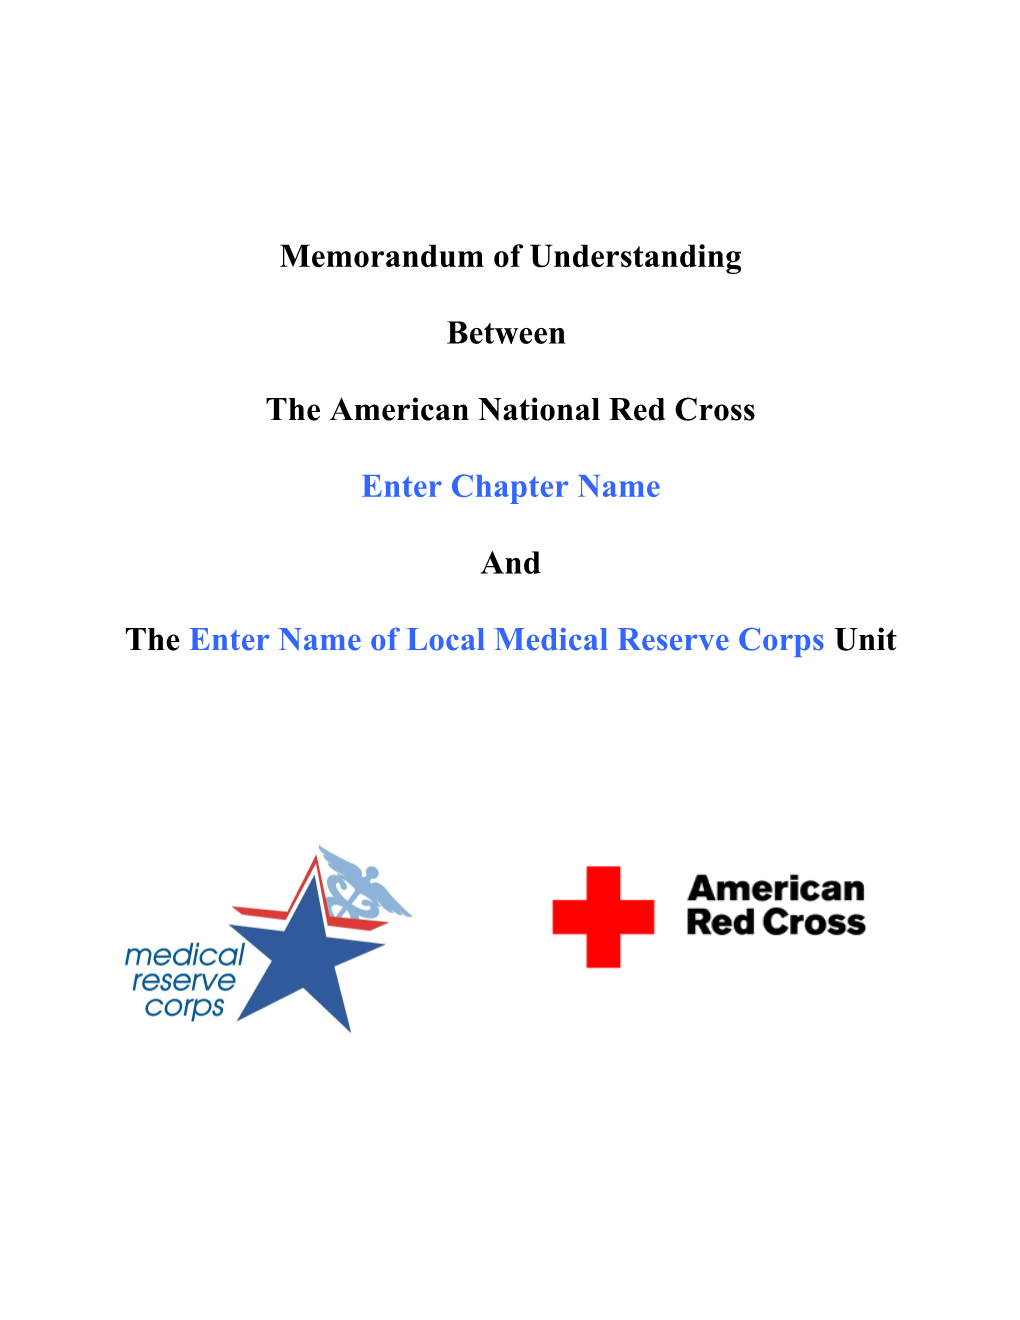 The Americannational Red Cross